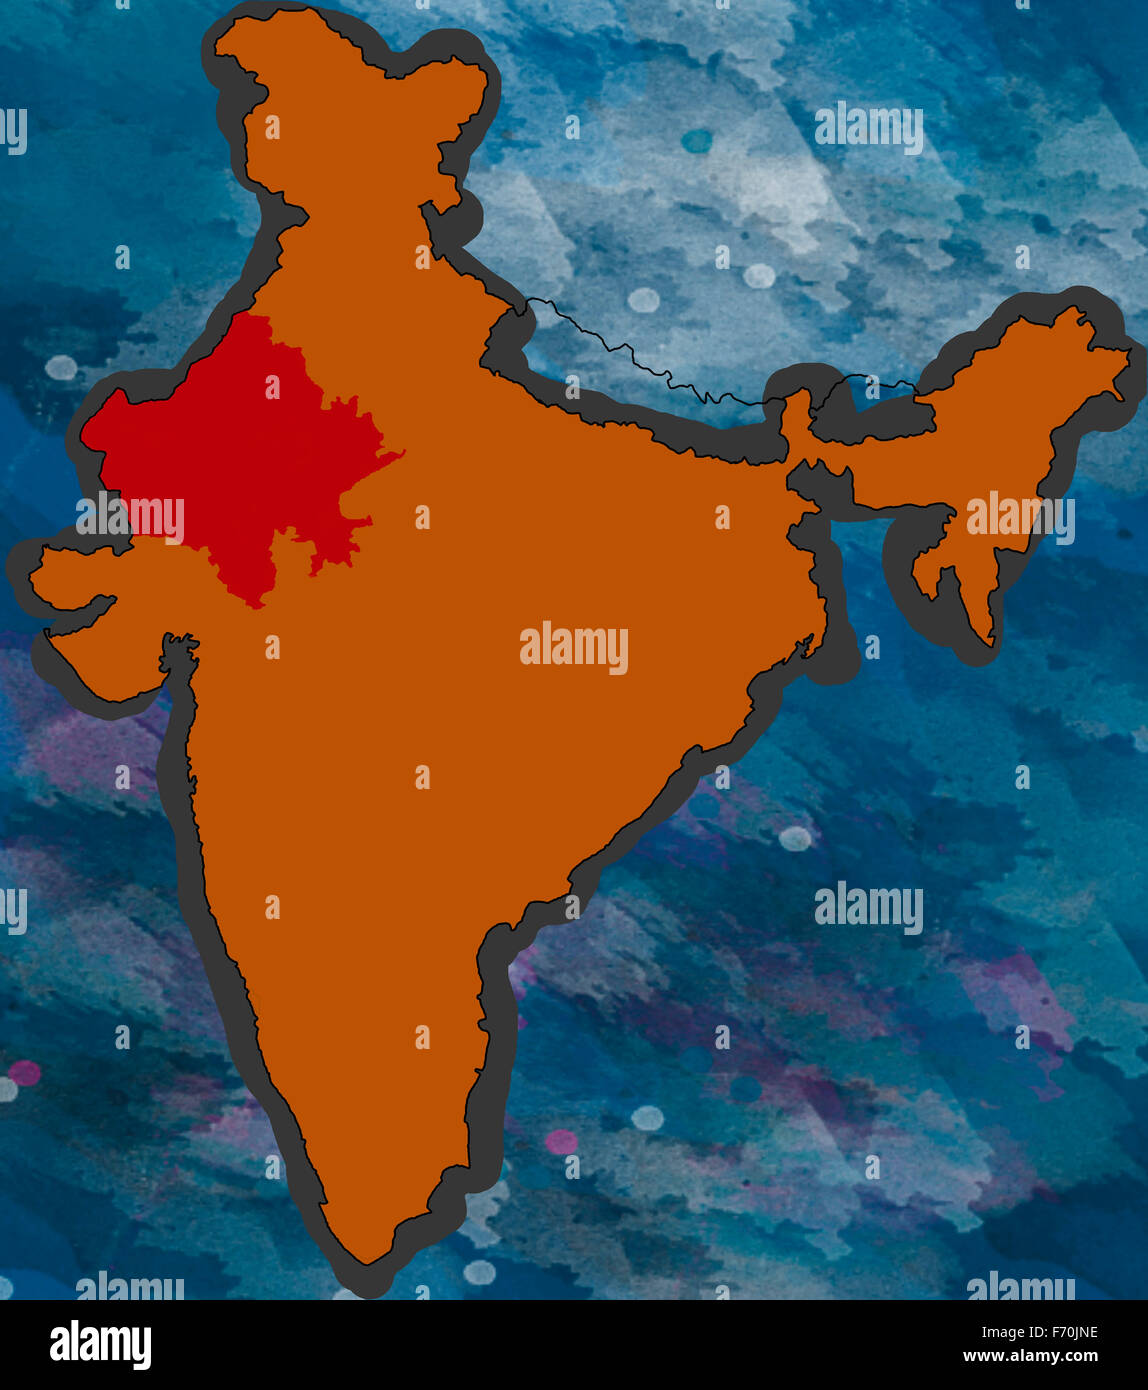 Illustration, rajasthan location map, india, asia Stock Photo